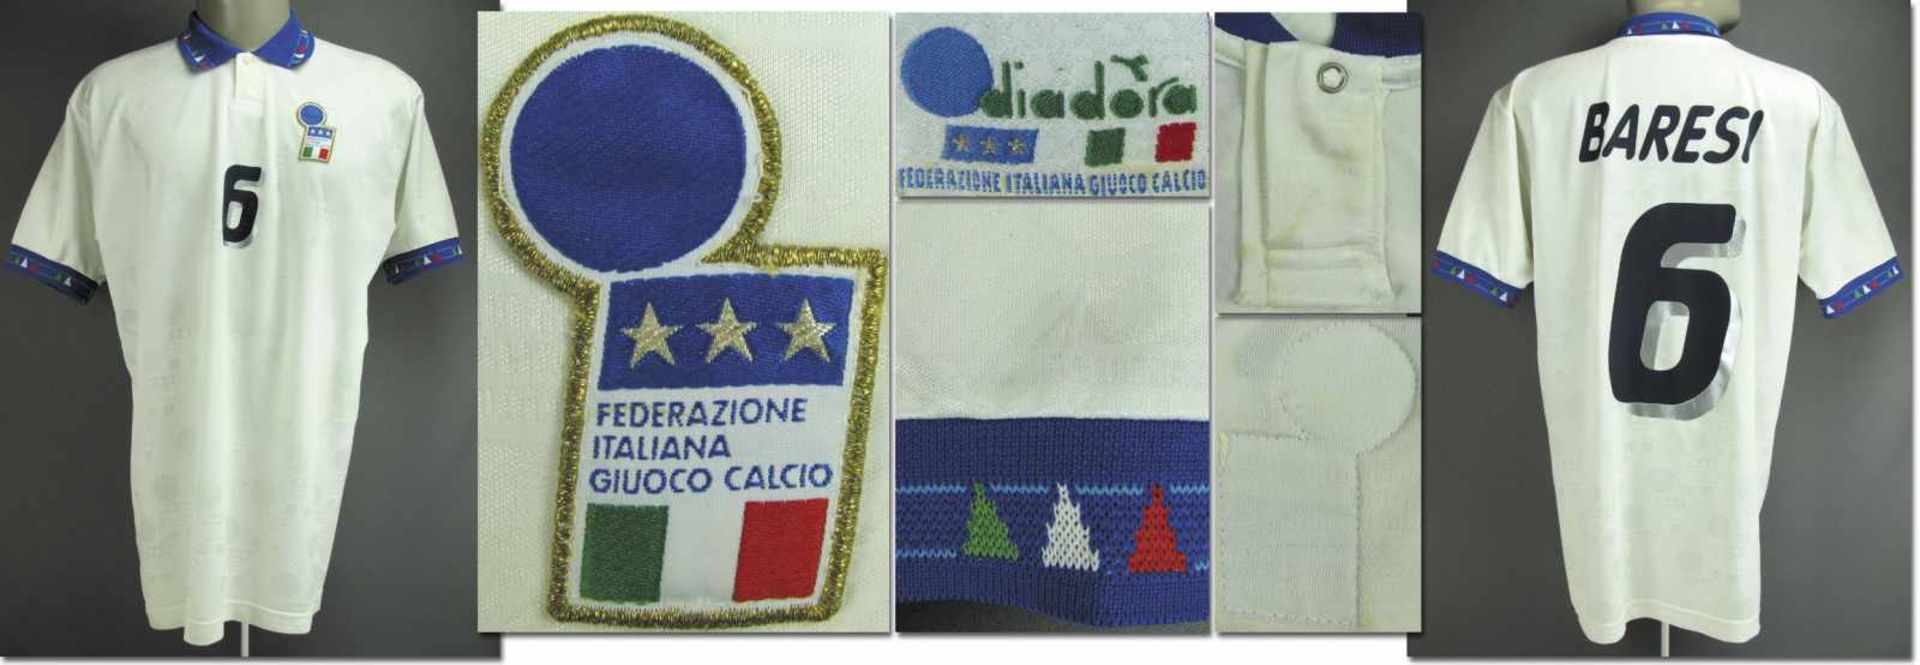 World Cup 1994 match worn football shirt Italy - Original match worn shirt Italy with number 6. Worn